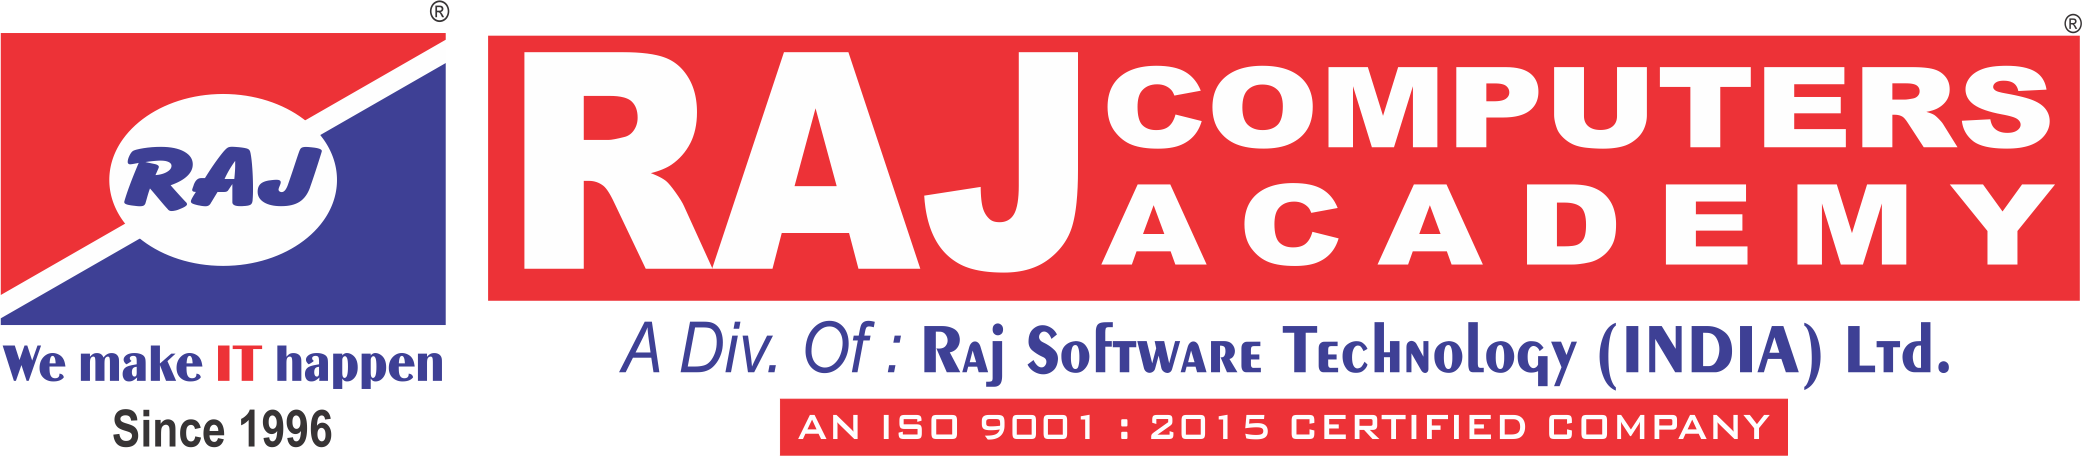 Raj Computers Academy Logo